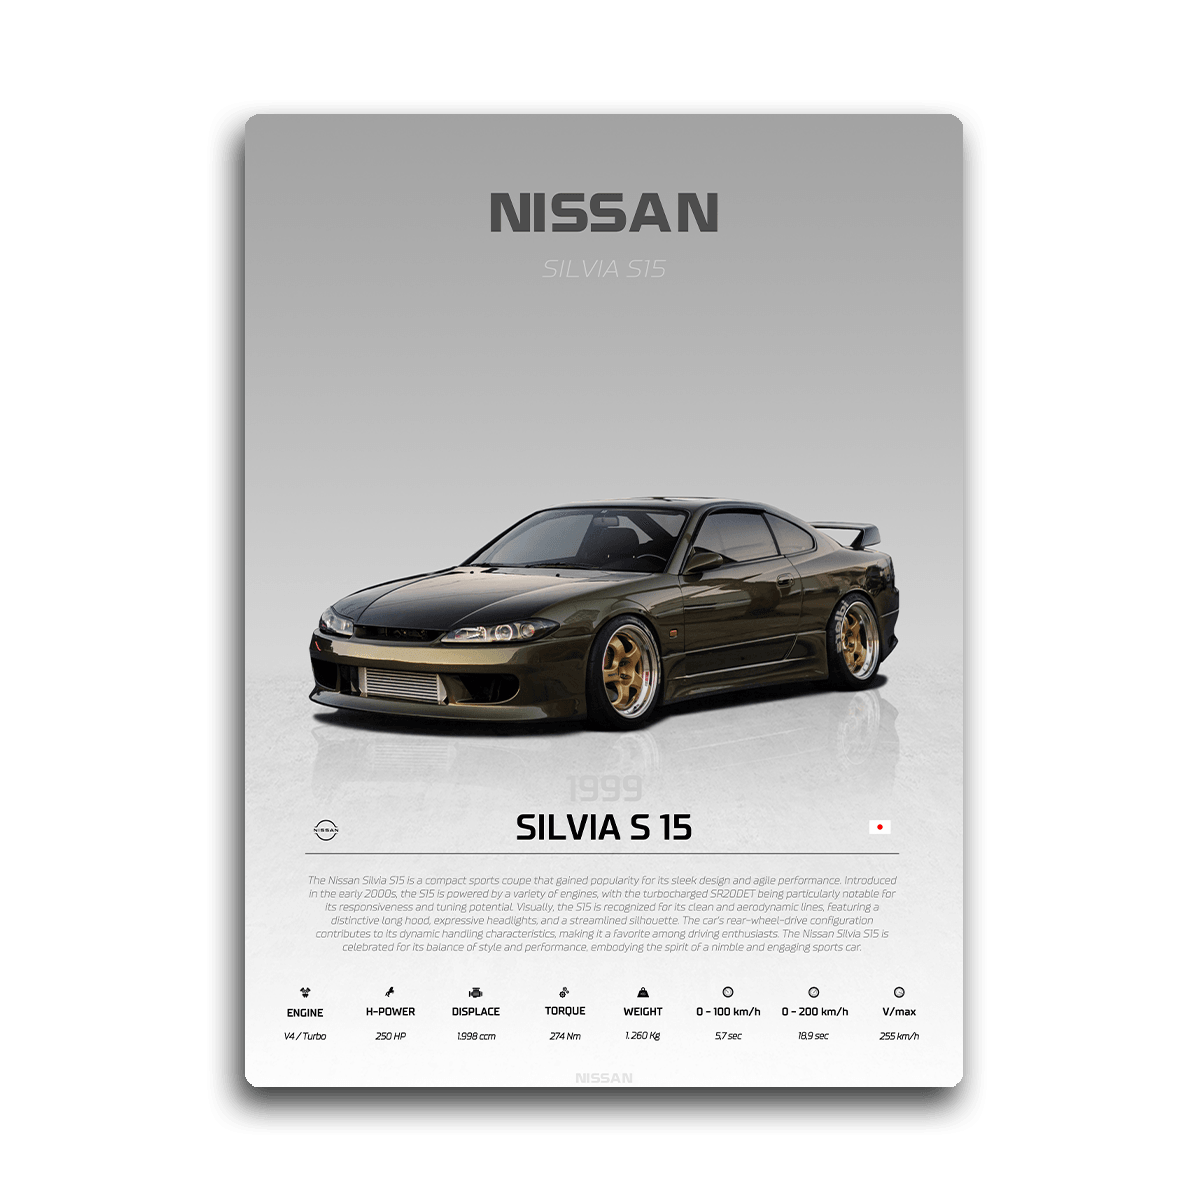 Nissan Silvia S15 - HD Metal Print - PixMagic